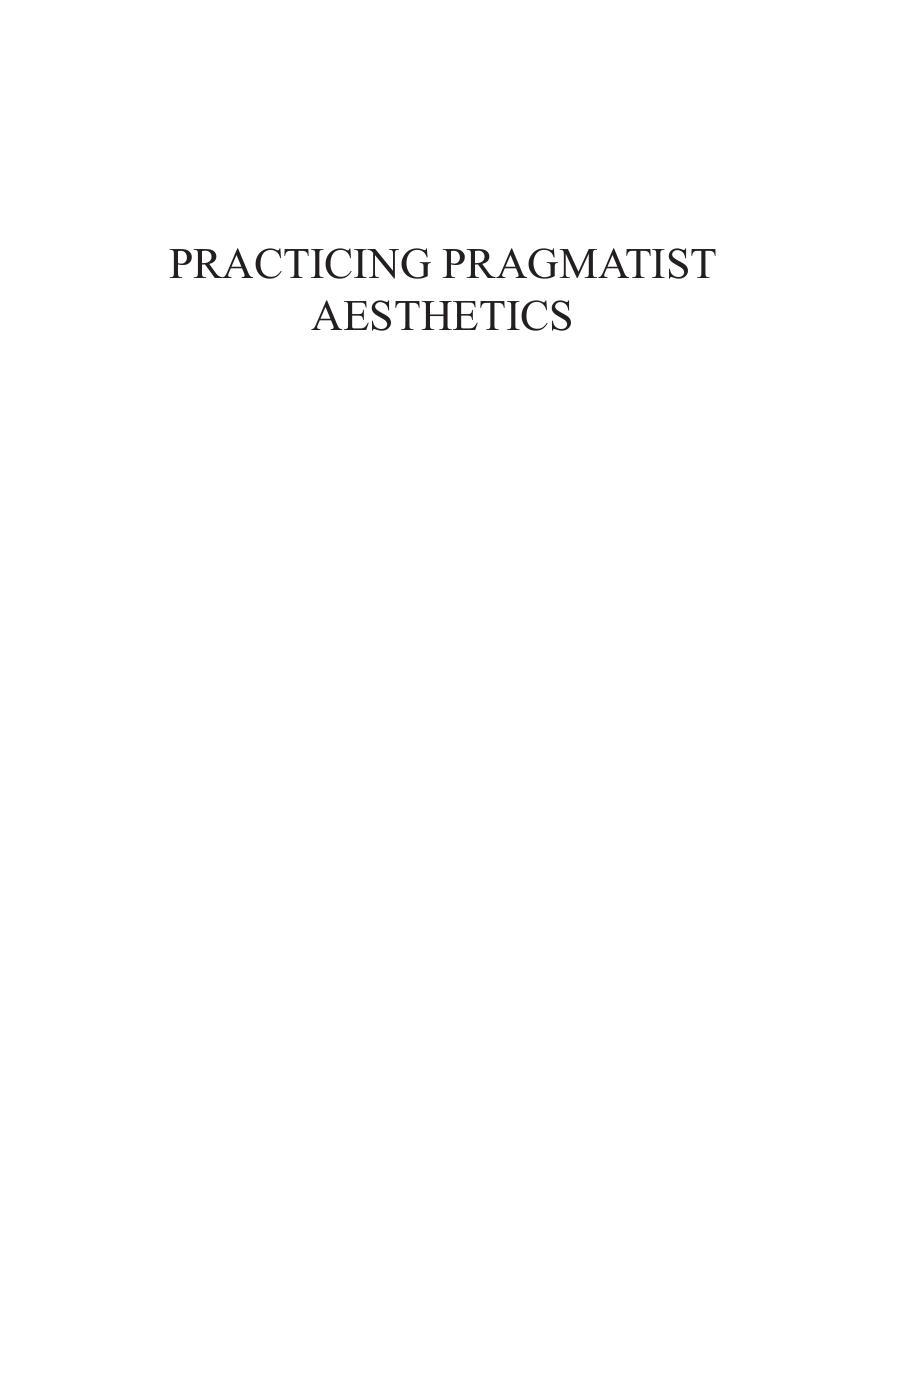 Practicing Pragmatist Aesthetics: Critical Perspectives on the Arts by Wojciech Małecki